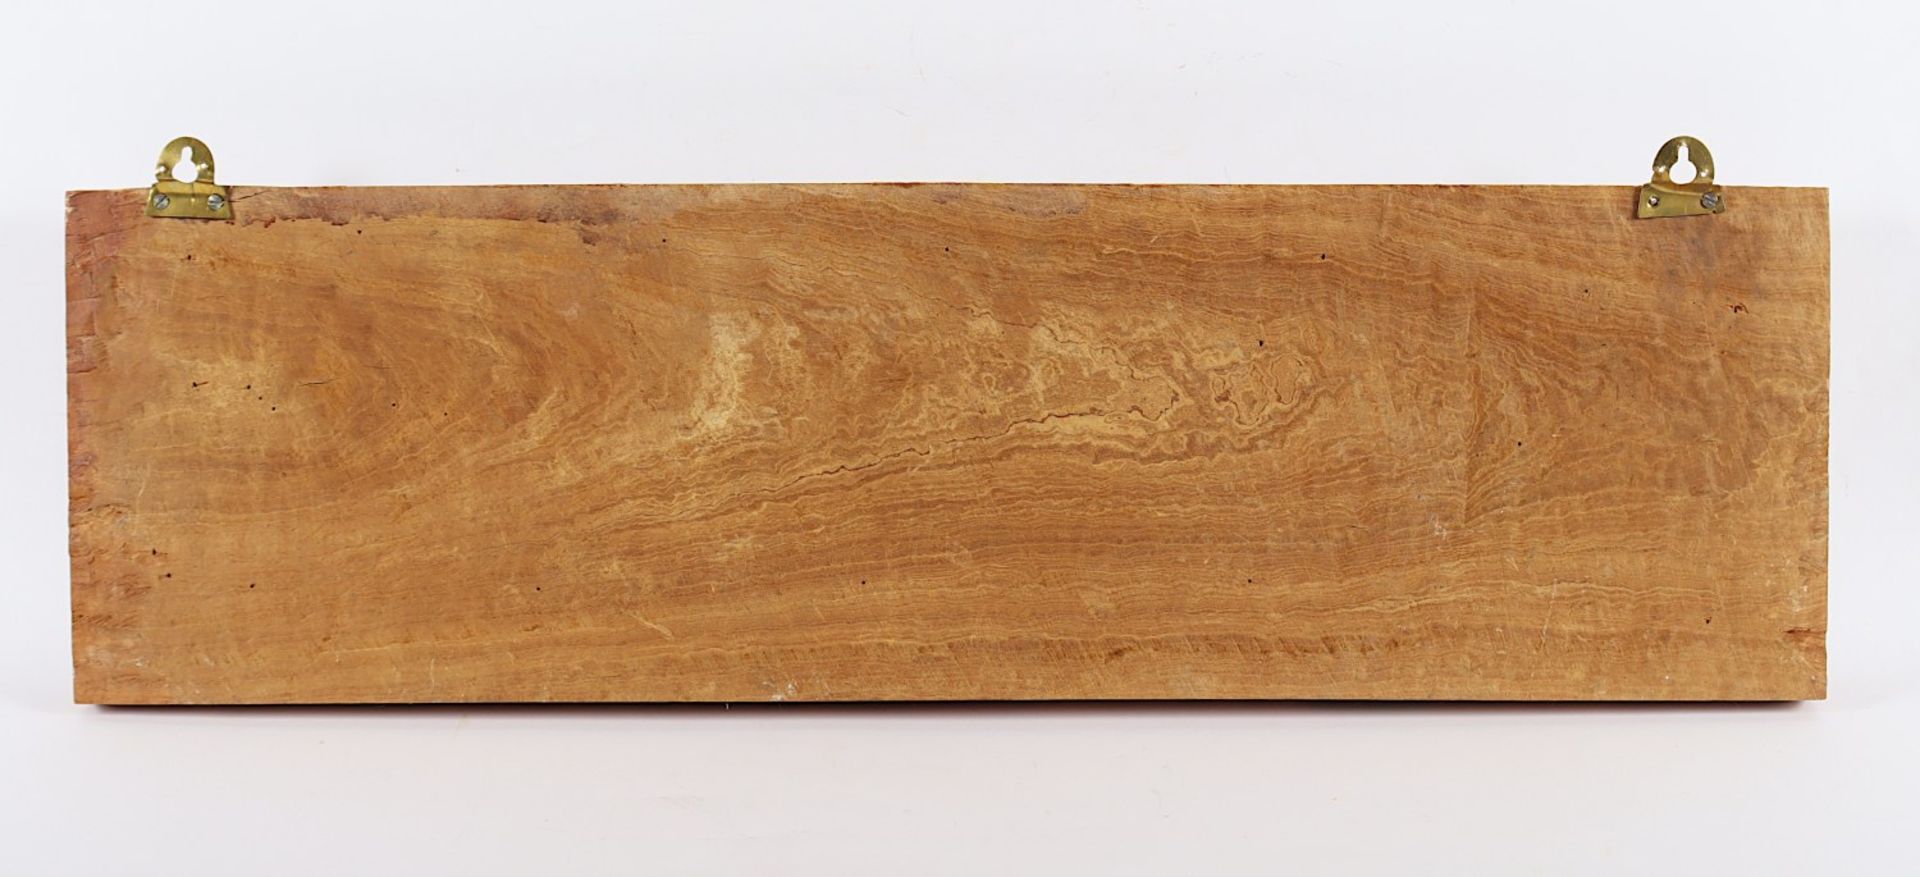 PANEEL, Holz, im hohen Relief - Image 2 of 3